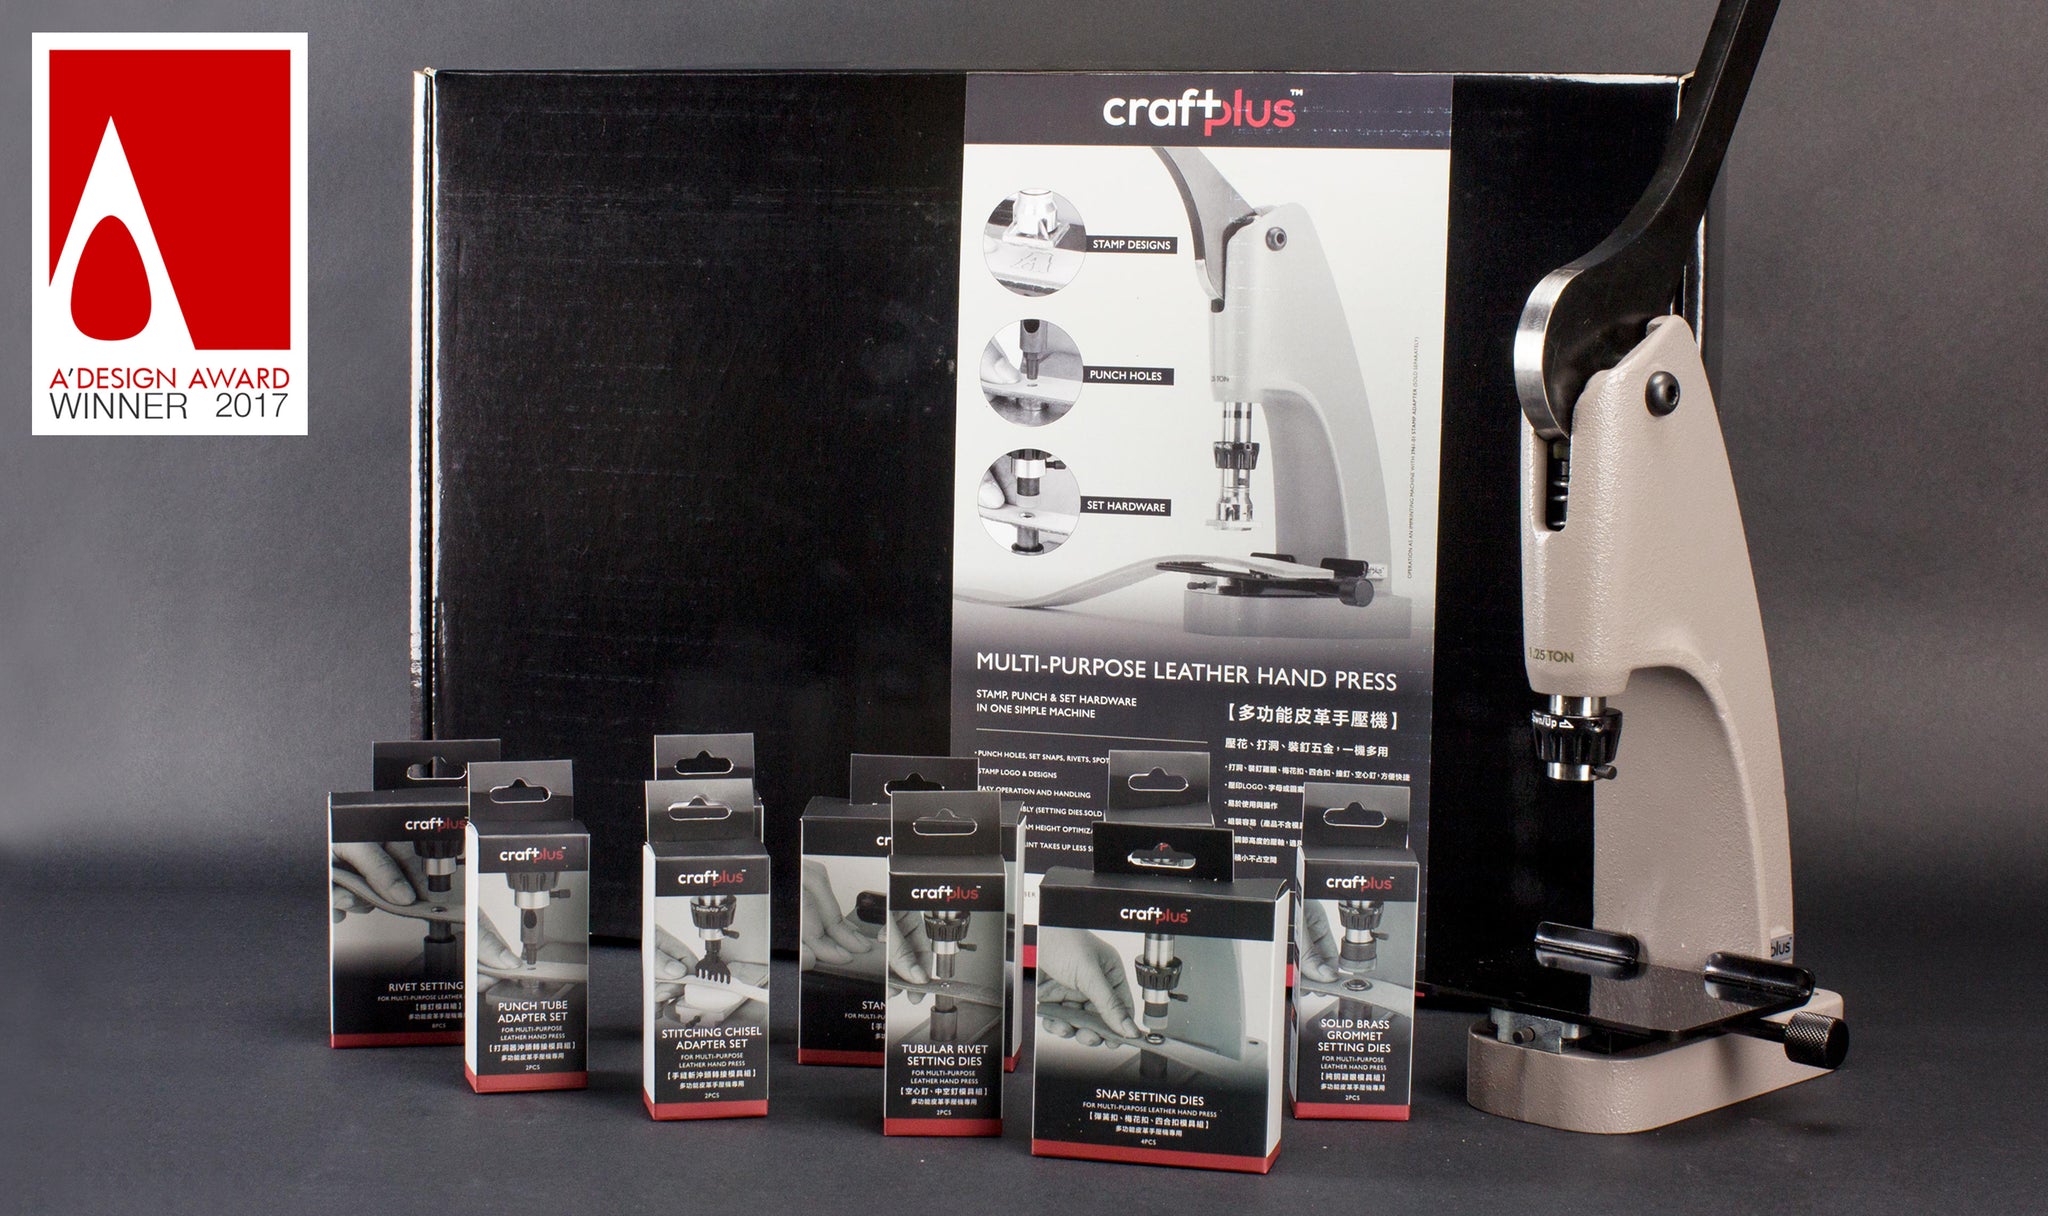 Winning Design, the Craftplus Multi-Purpose Leather Hand Press